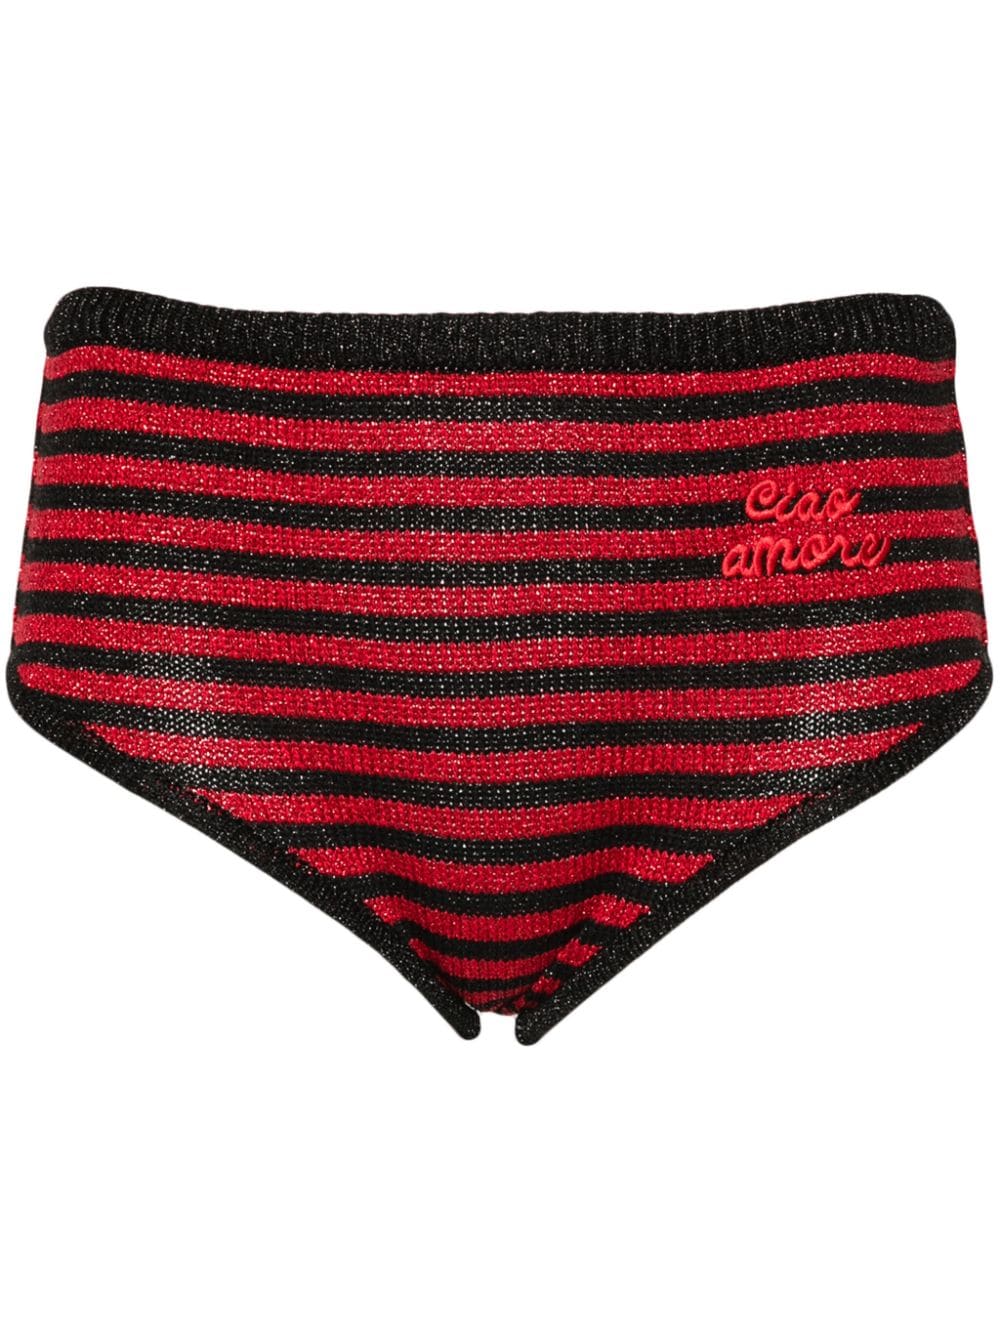 Giada Benincasa striped knitted mini shorts - Nero